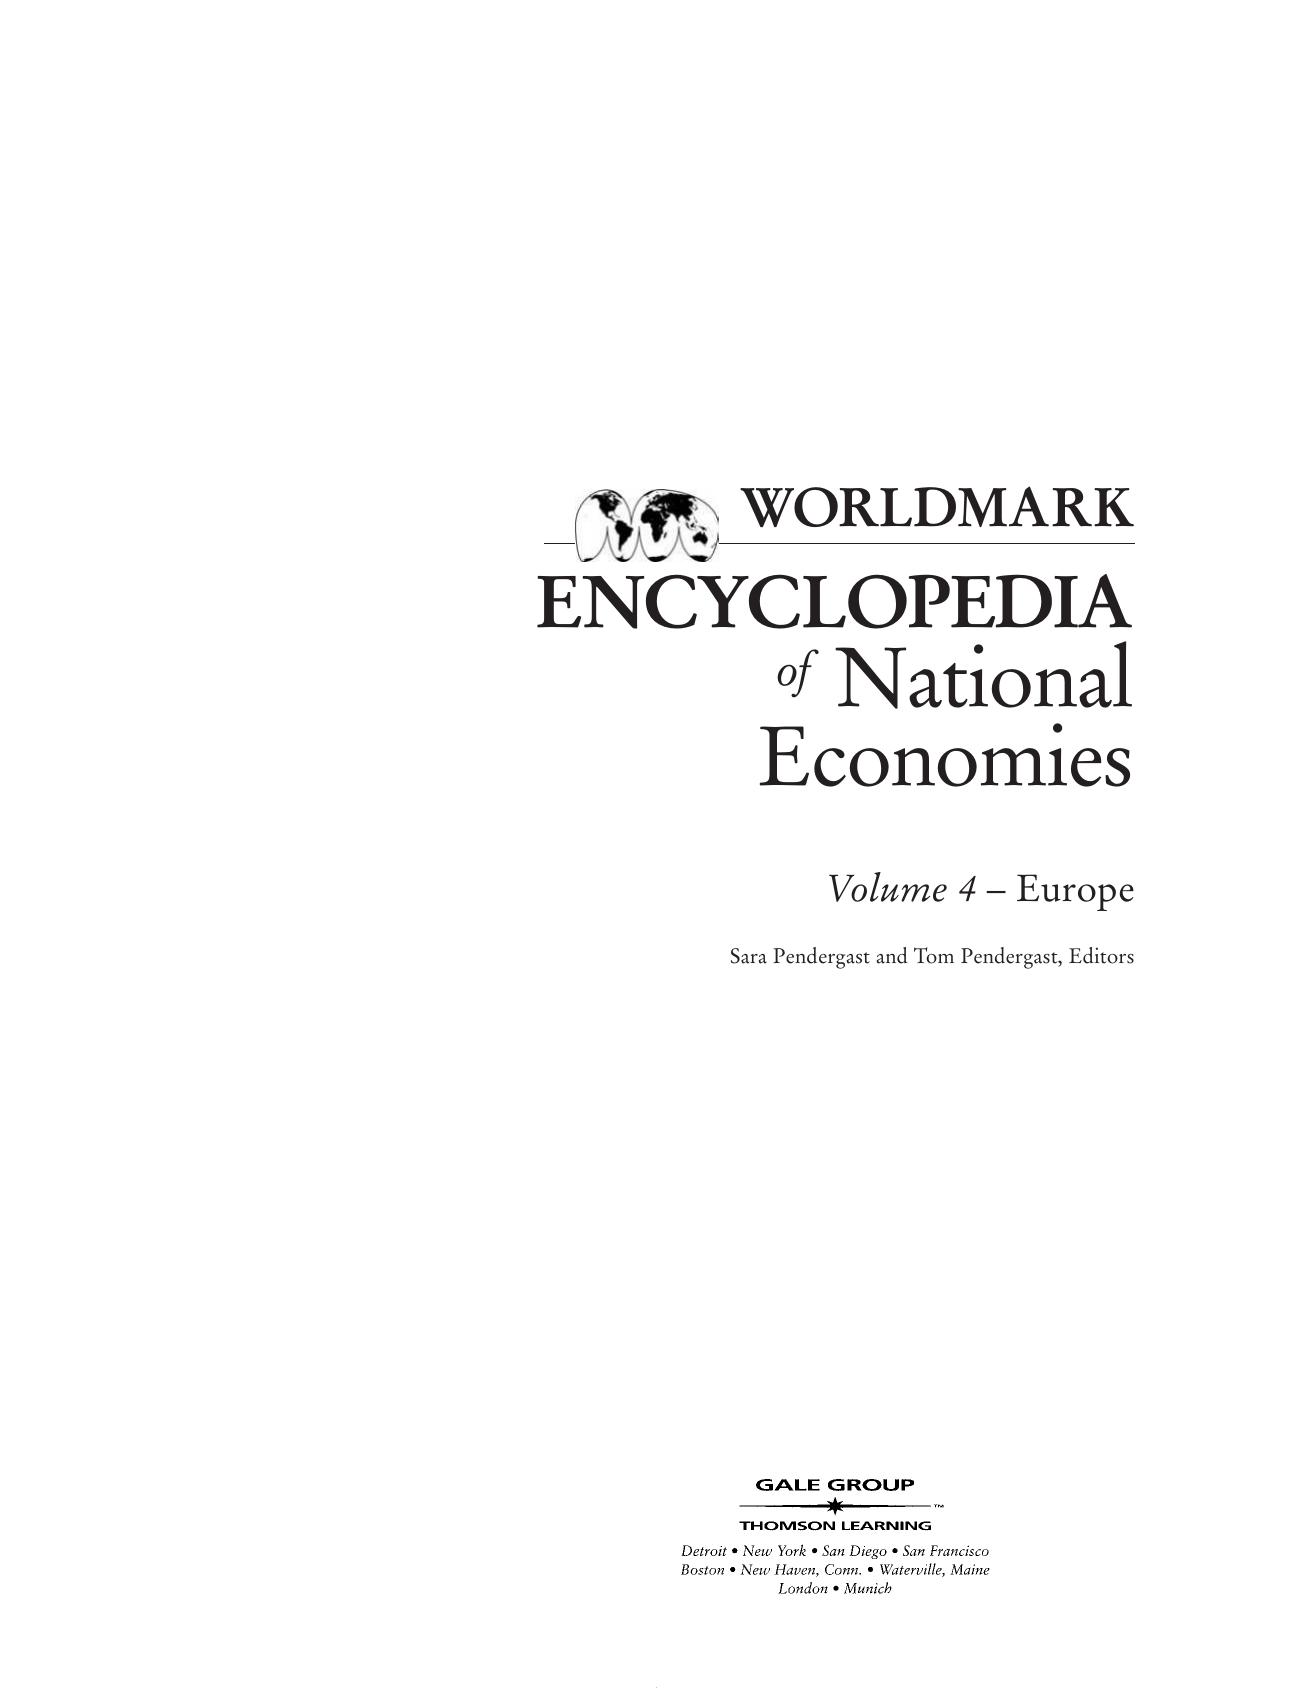 Worldmark Encyclopedia of National Economies: Europe